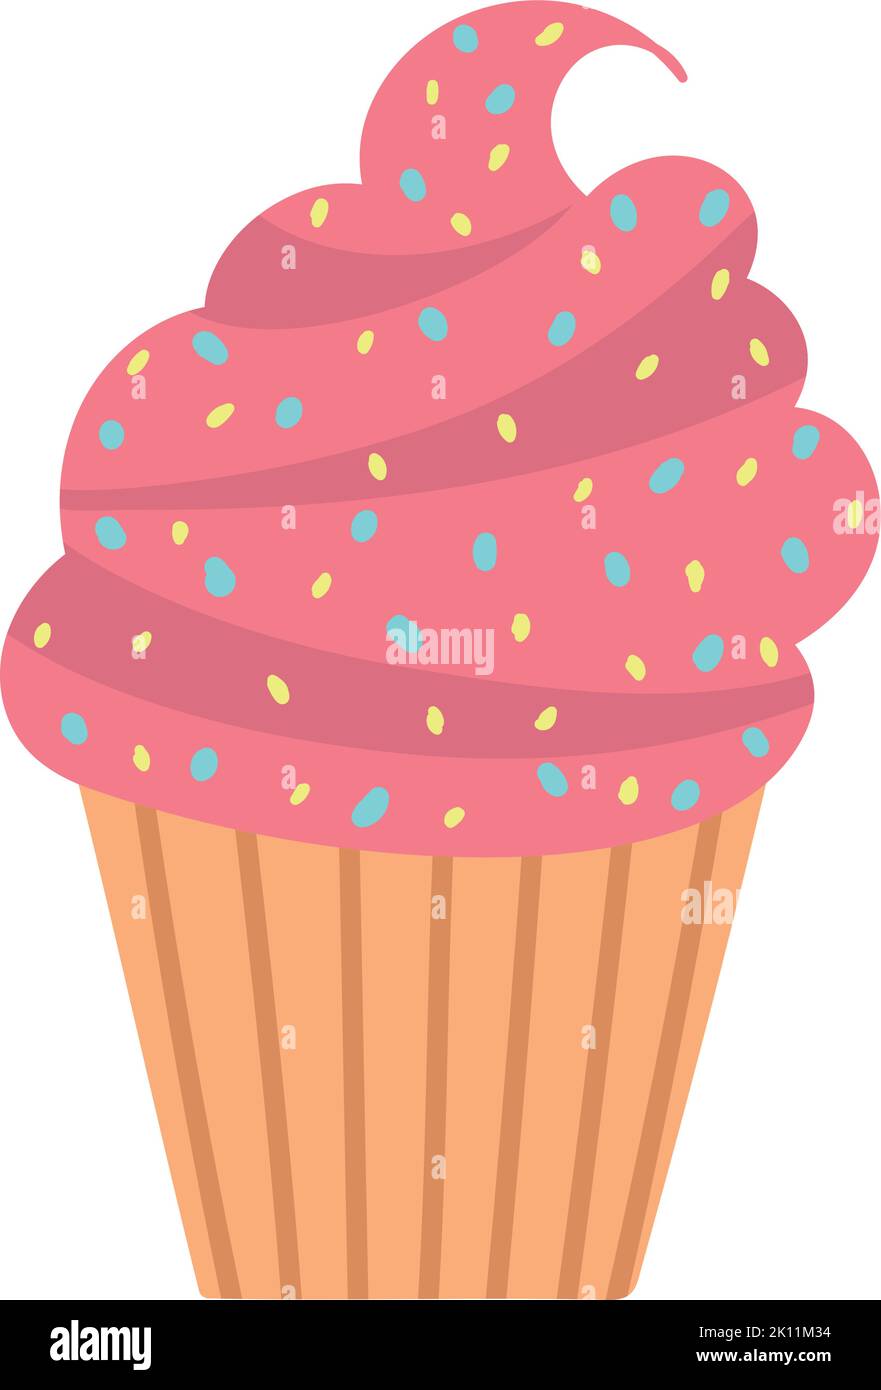 sweet cupcake icon Stock Vector